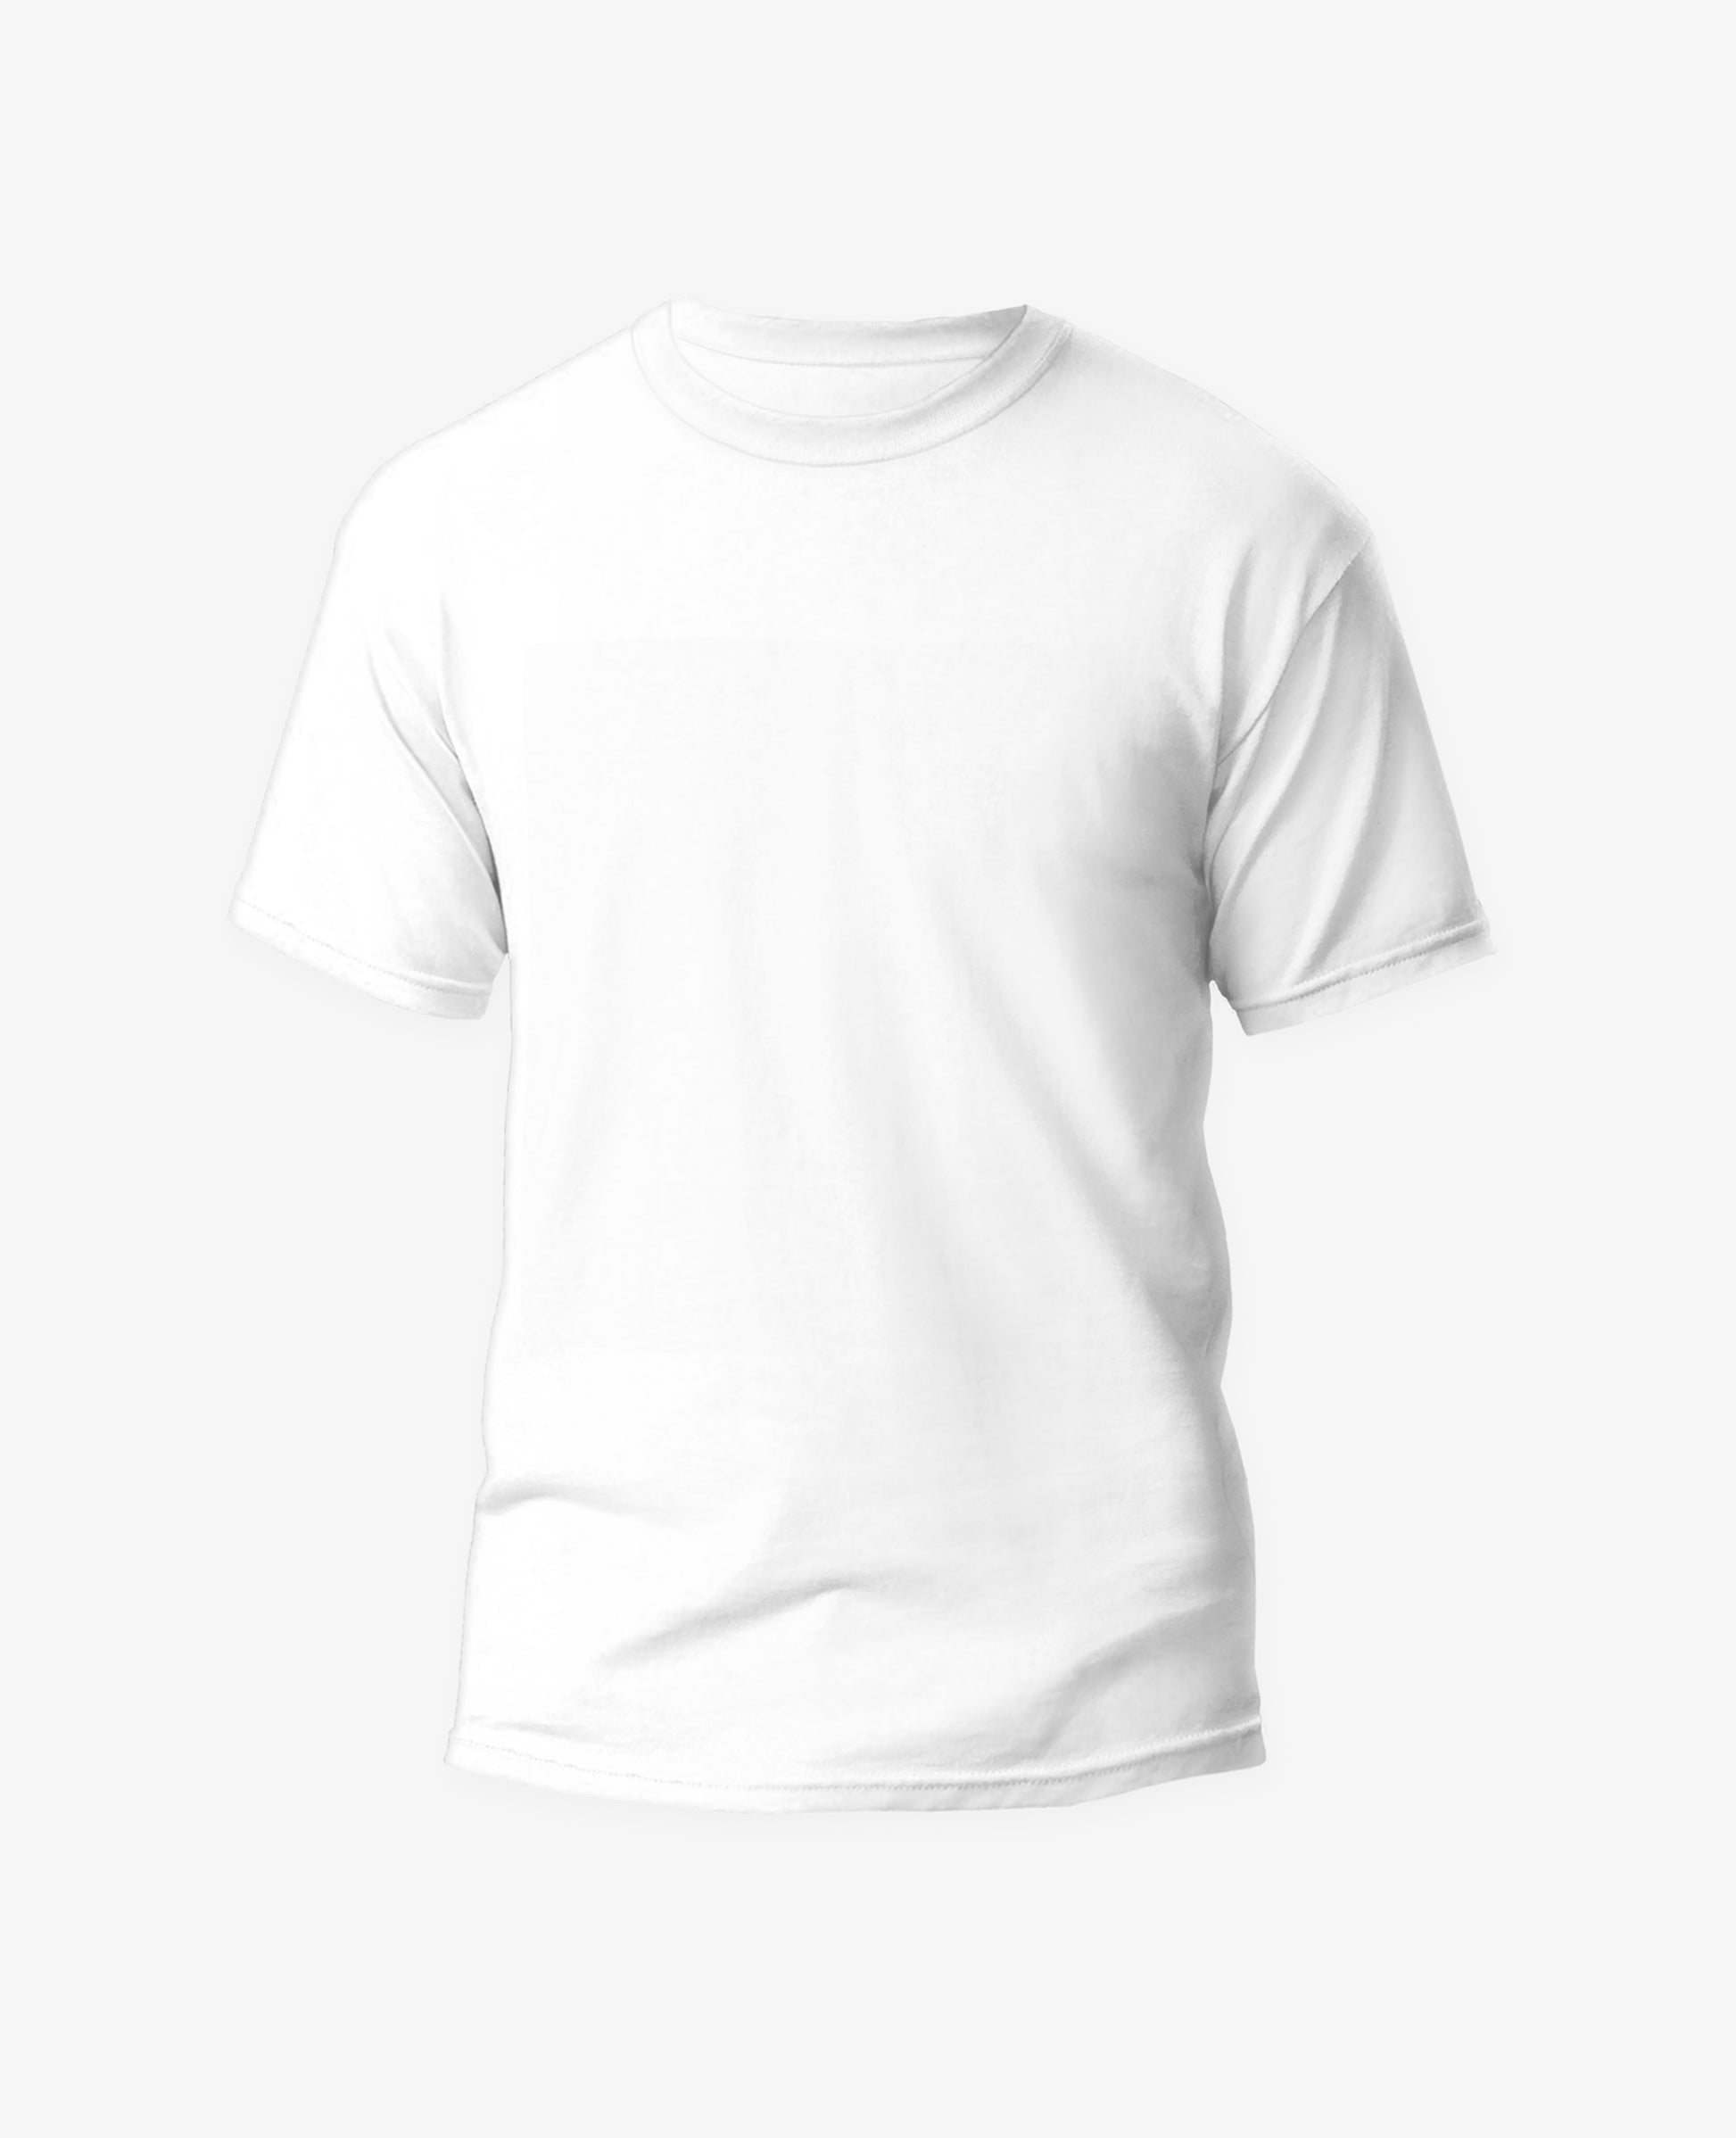 White Plain Cotton T-Shirt (Unisex)